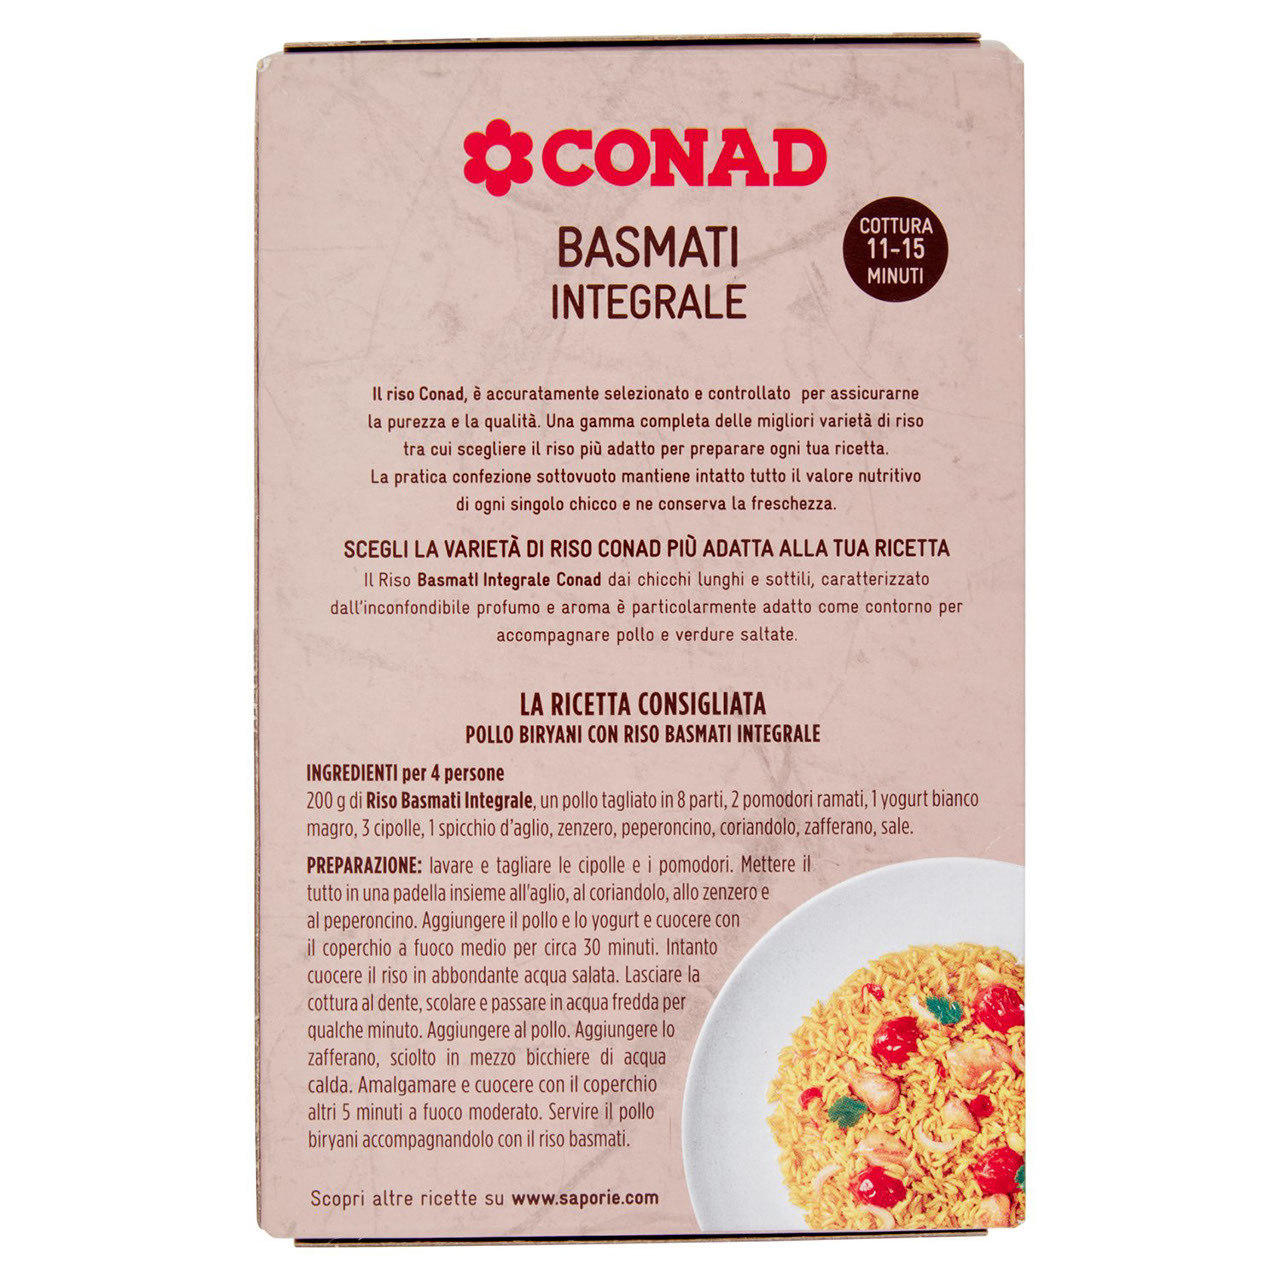 Basmati Integrale 500 g Conad in vendita online